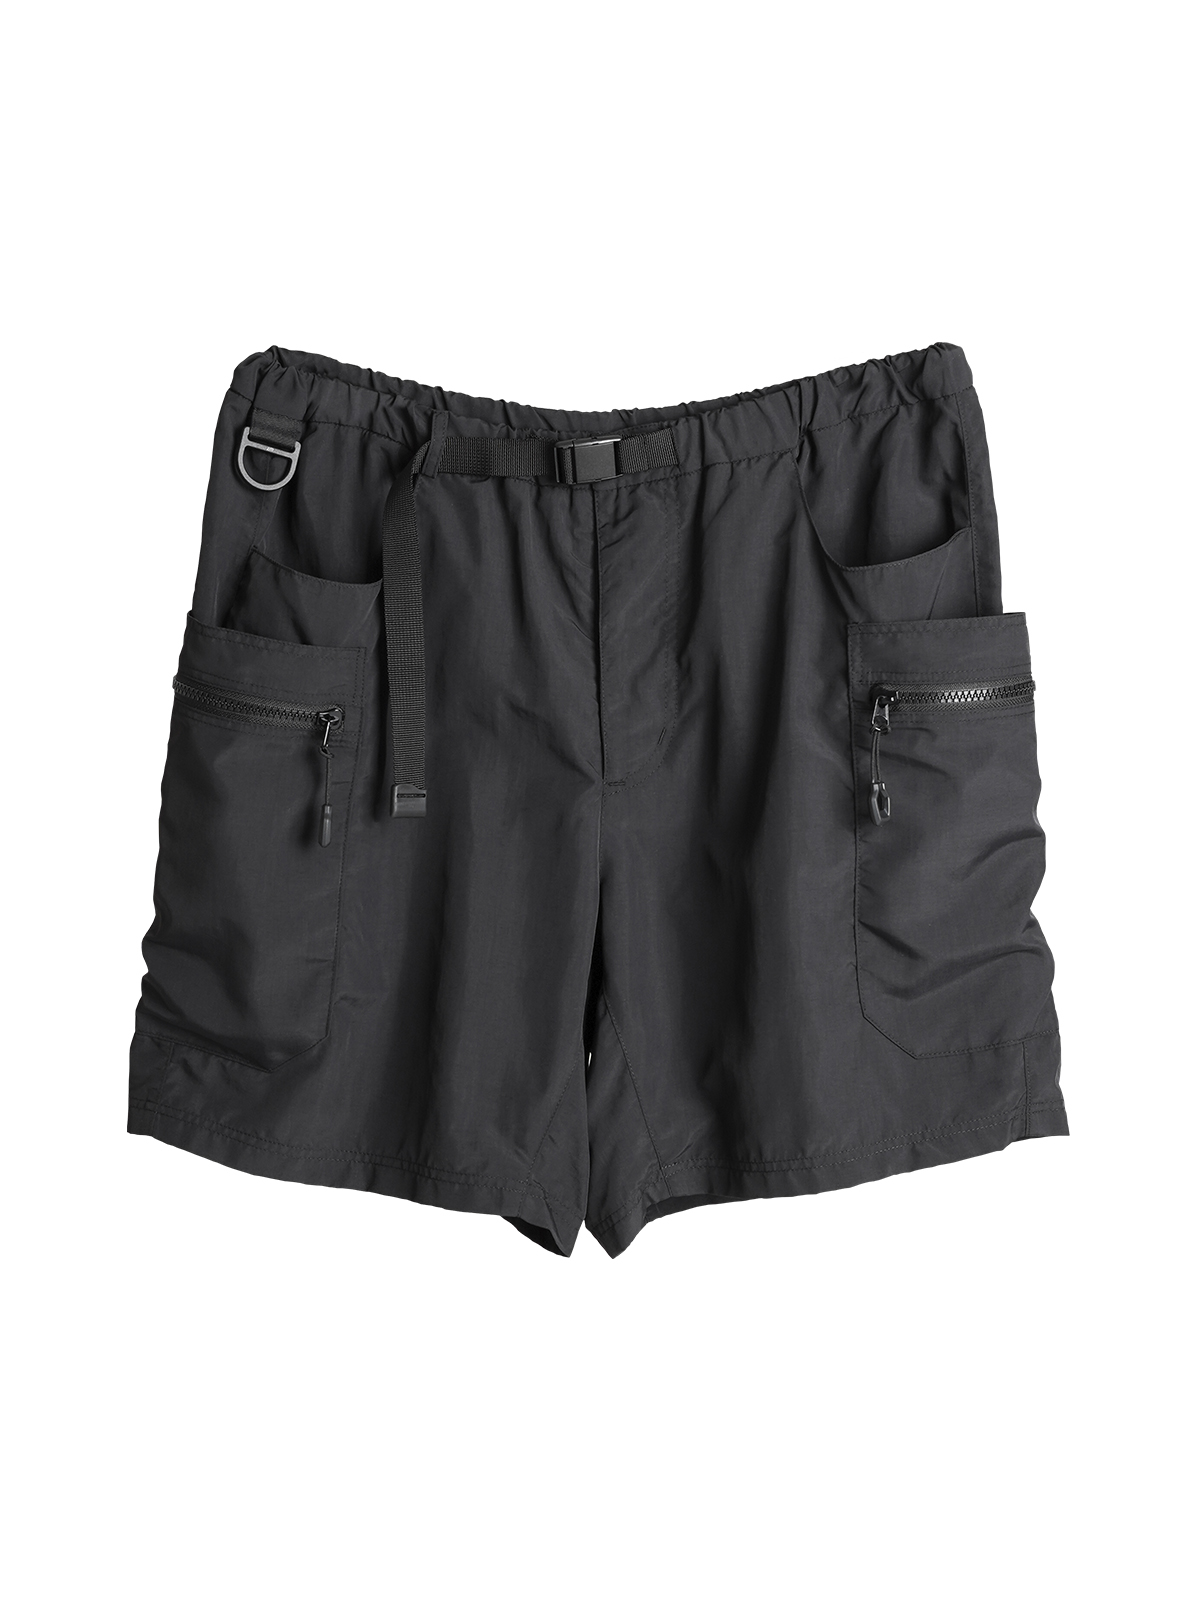 Supplex Multi Pocket Shorts - Black